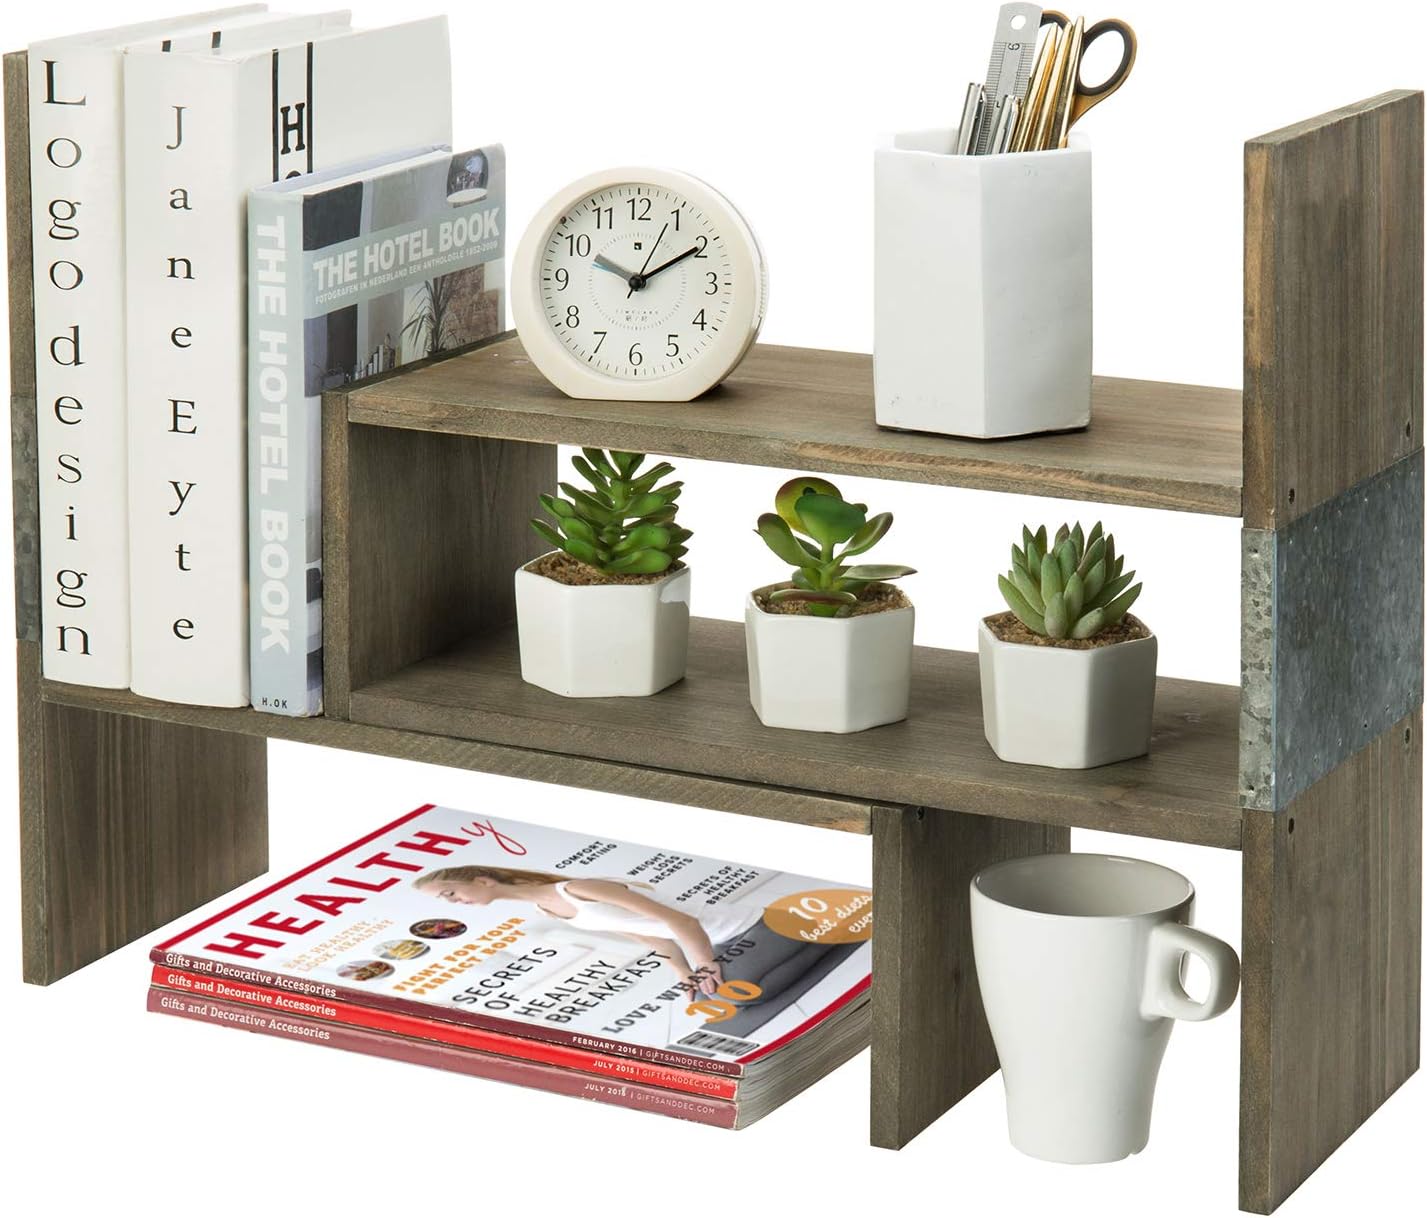 MyGift Rustic Brown Wood Desktop Shelf - Wooden Reclaimed Style and Galvanized Metal Adjustable Desk Bookcase Display Organizer